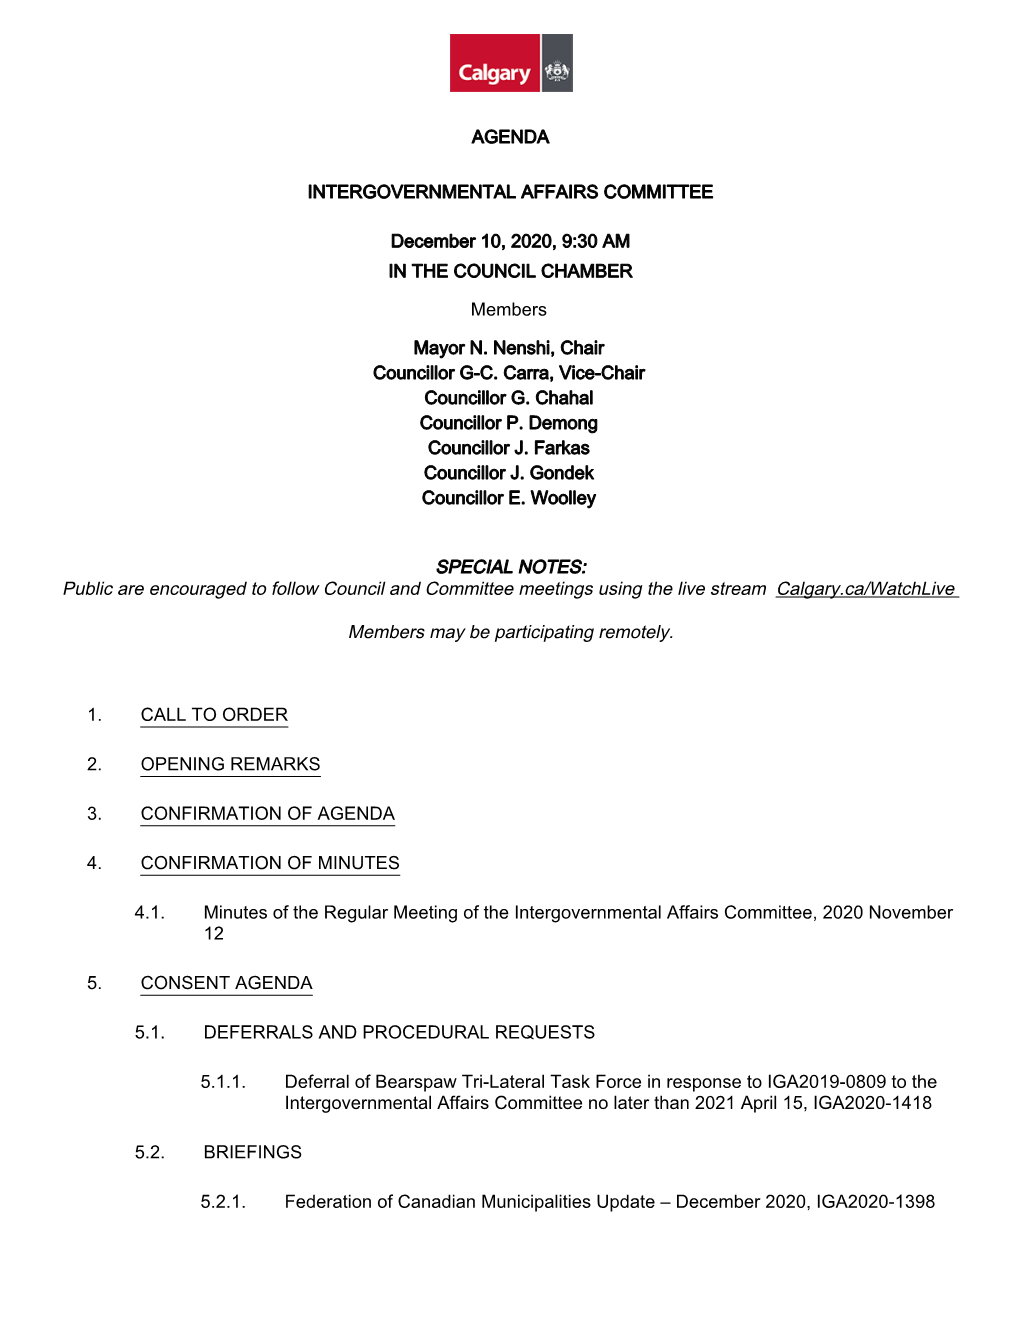 Intergovernmental Affairs Committee Agenda Package